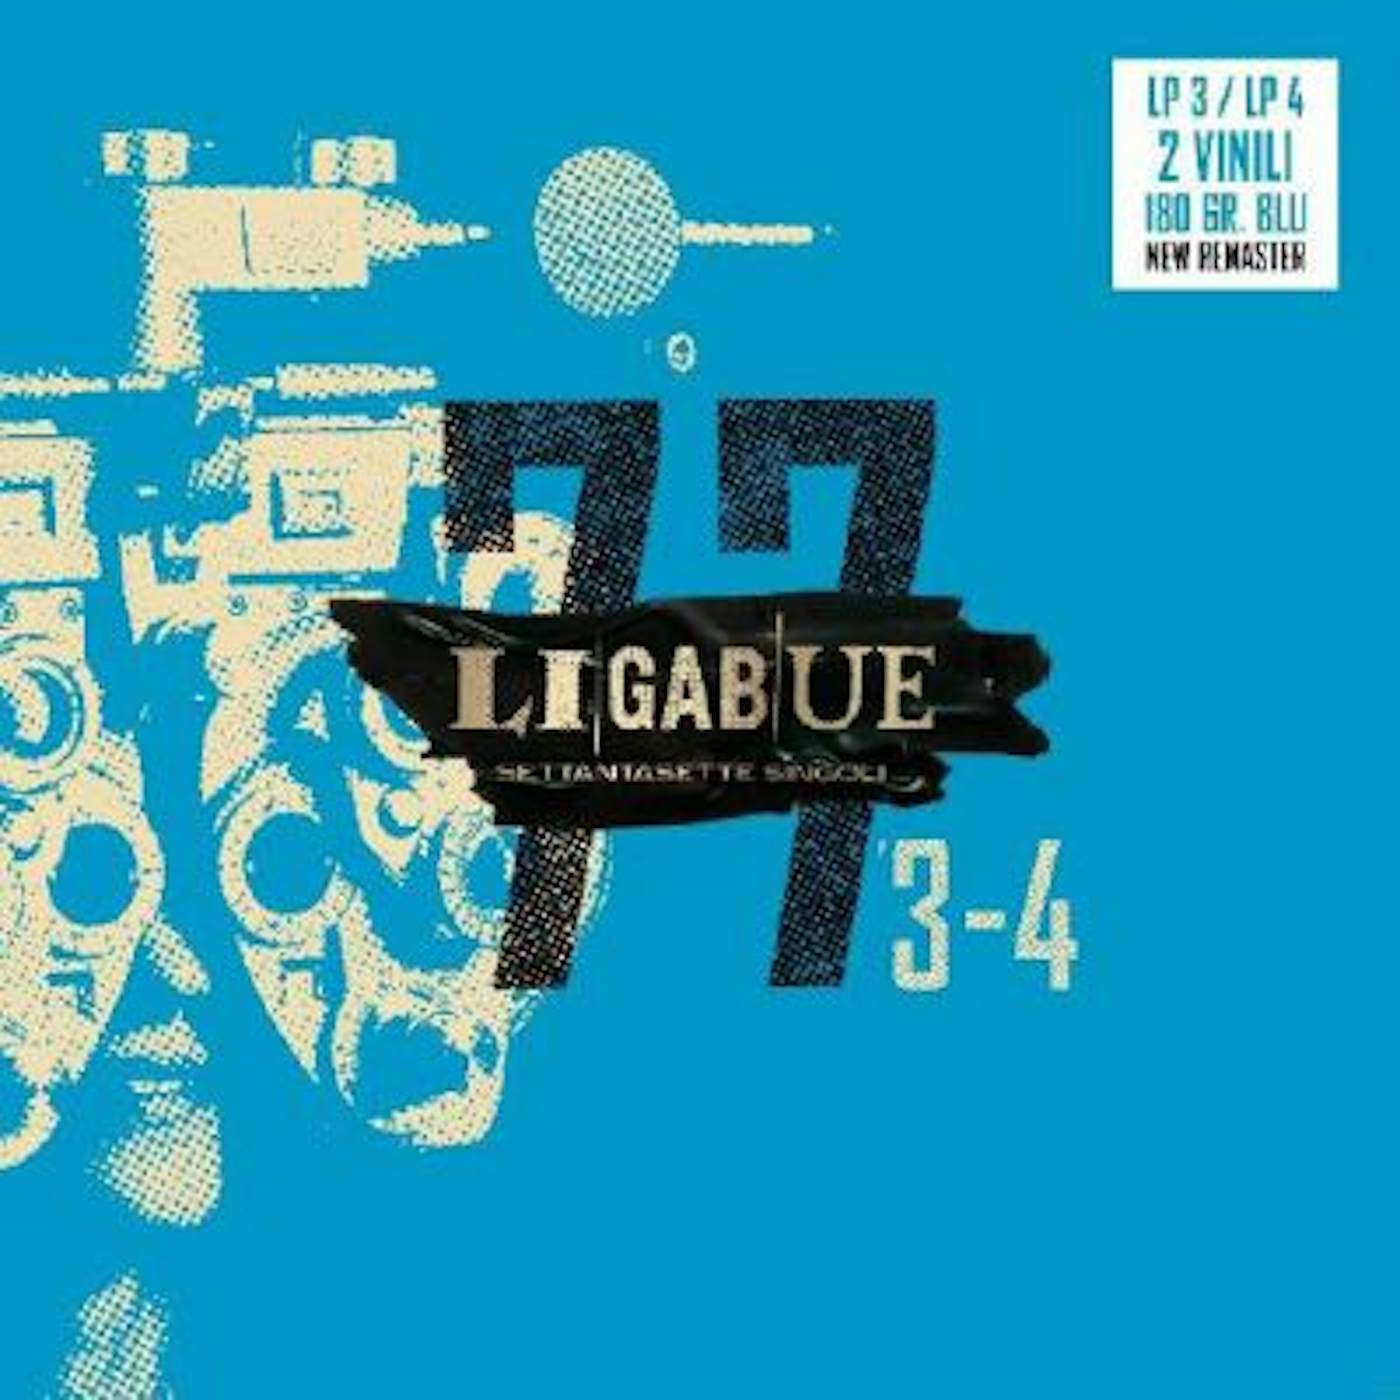 Ligabue 77 SINGOLI / LP 3-LP 4 Vinyl Record